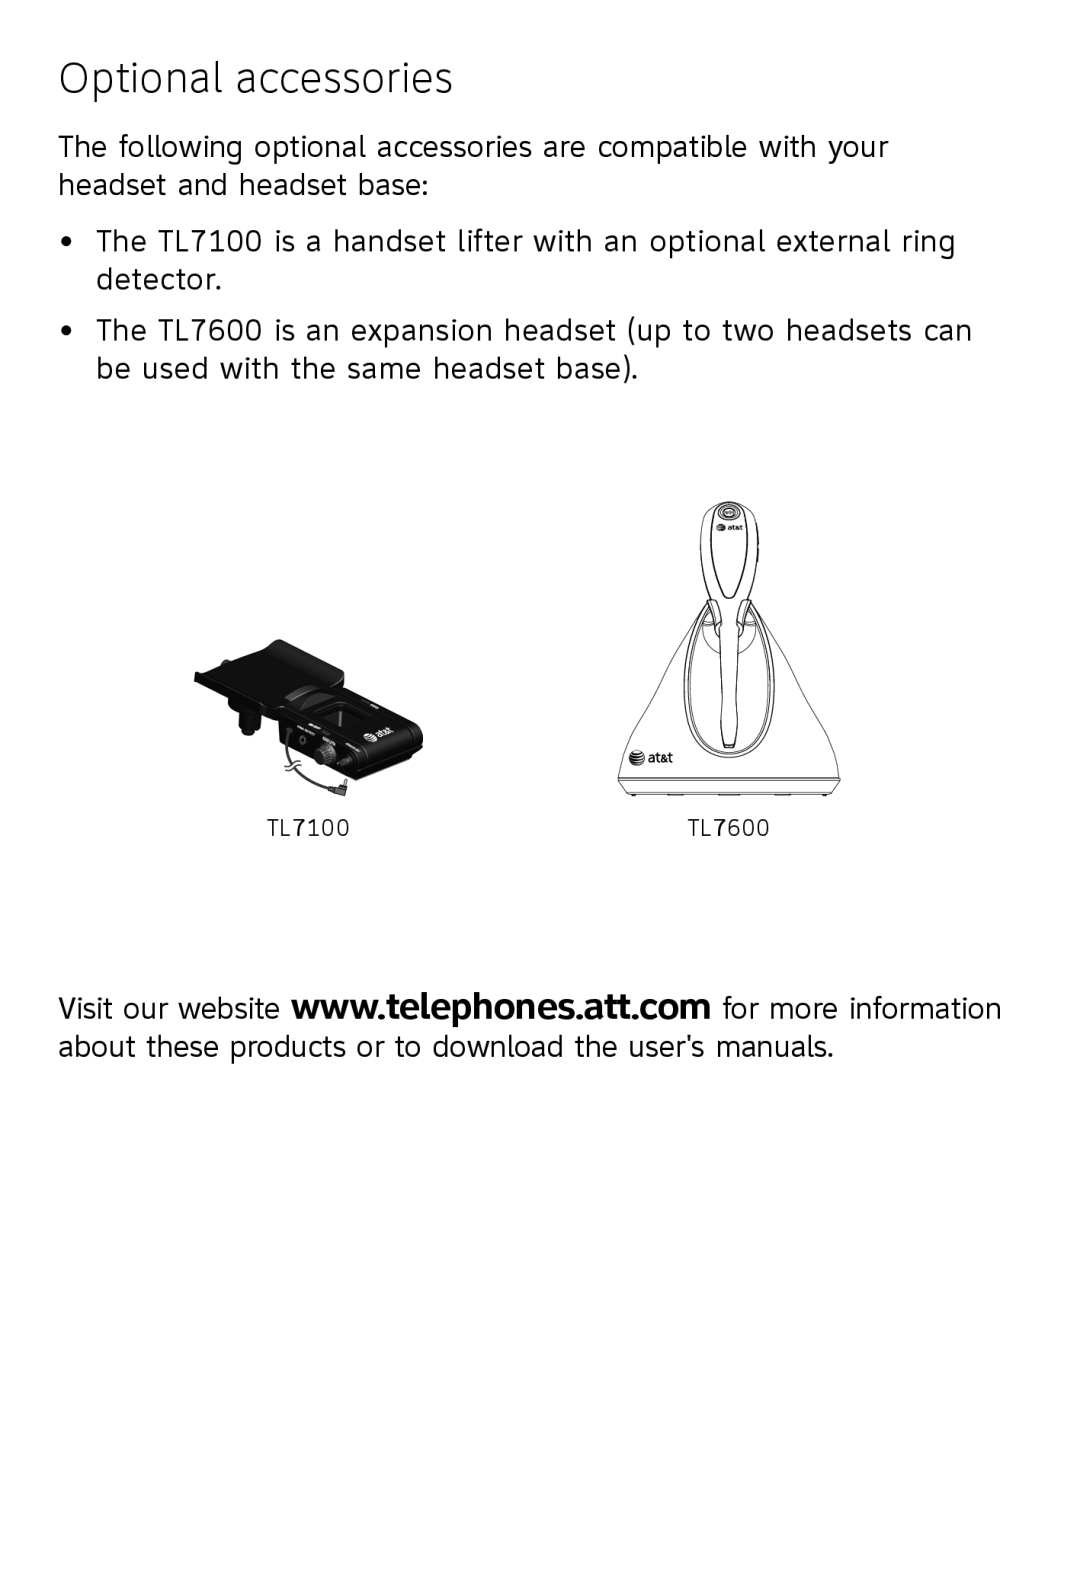 AT&T TL 7610 user manual Optional accessories, TL7100, TL7600 